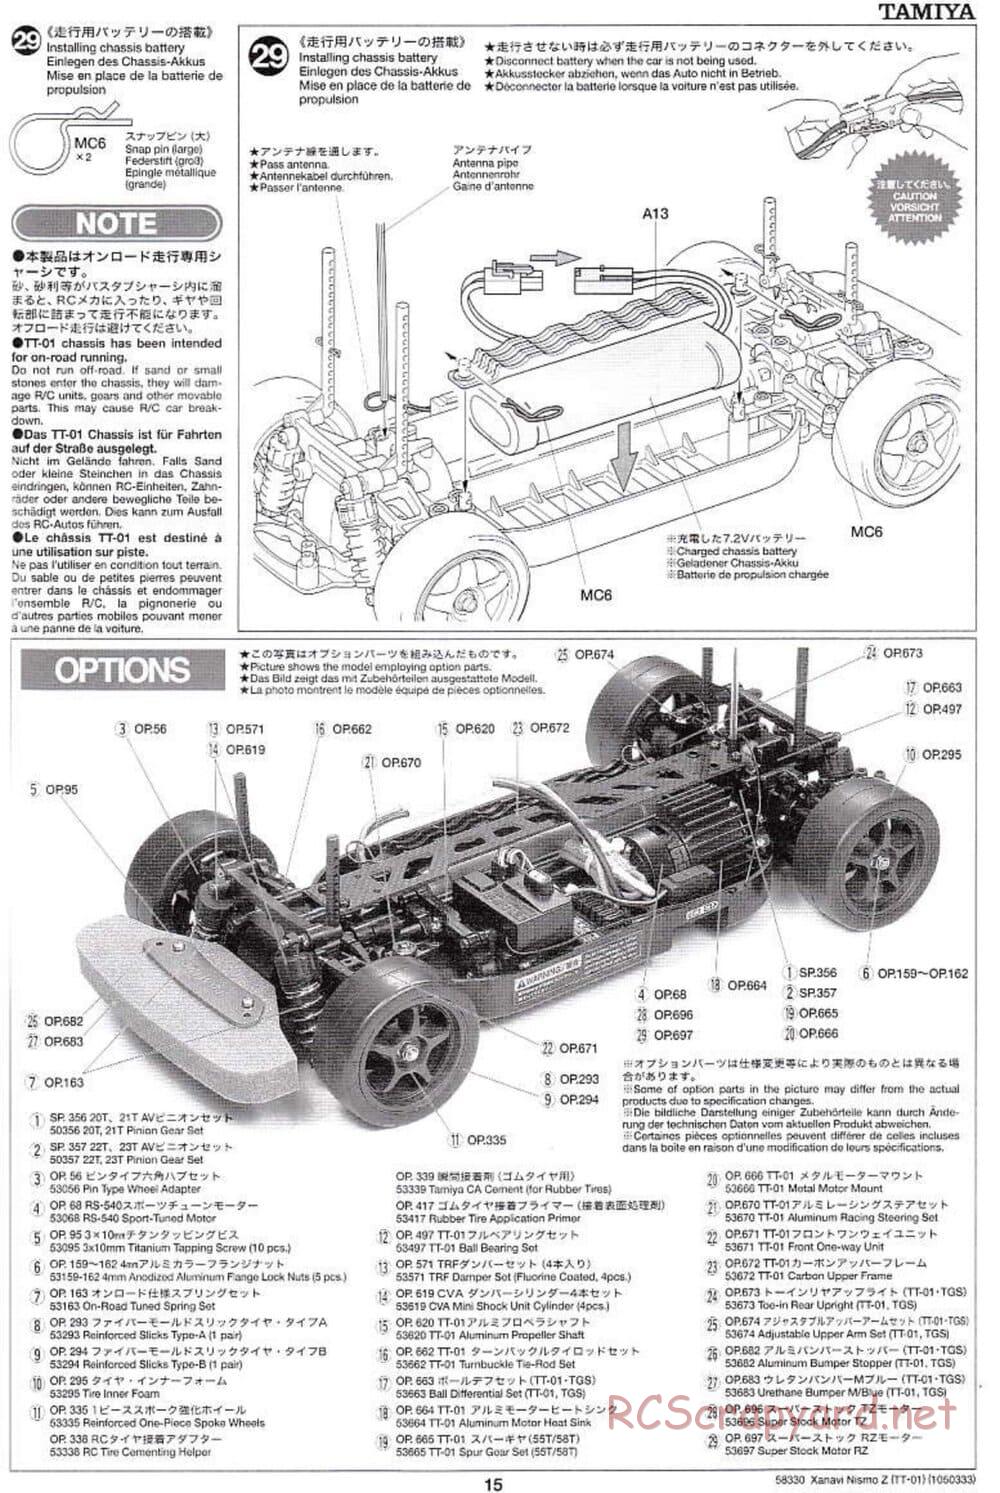 Tamiya - Xanavi Nismo Z - TT-01 Chassis - Manual - Page 15